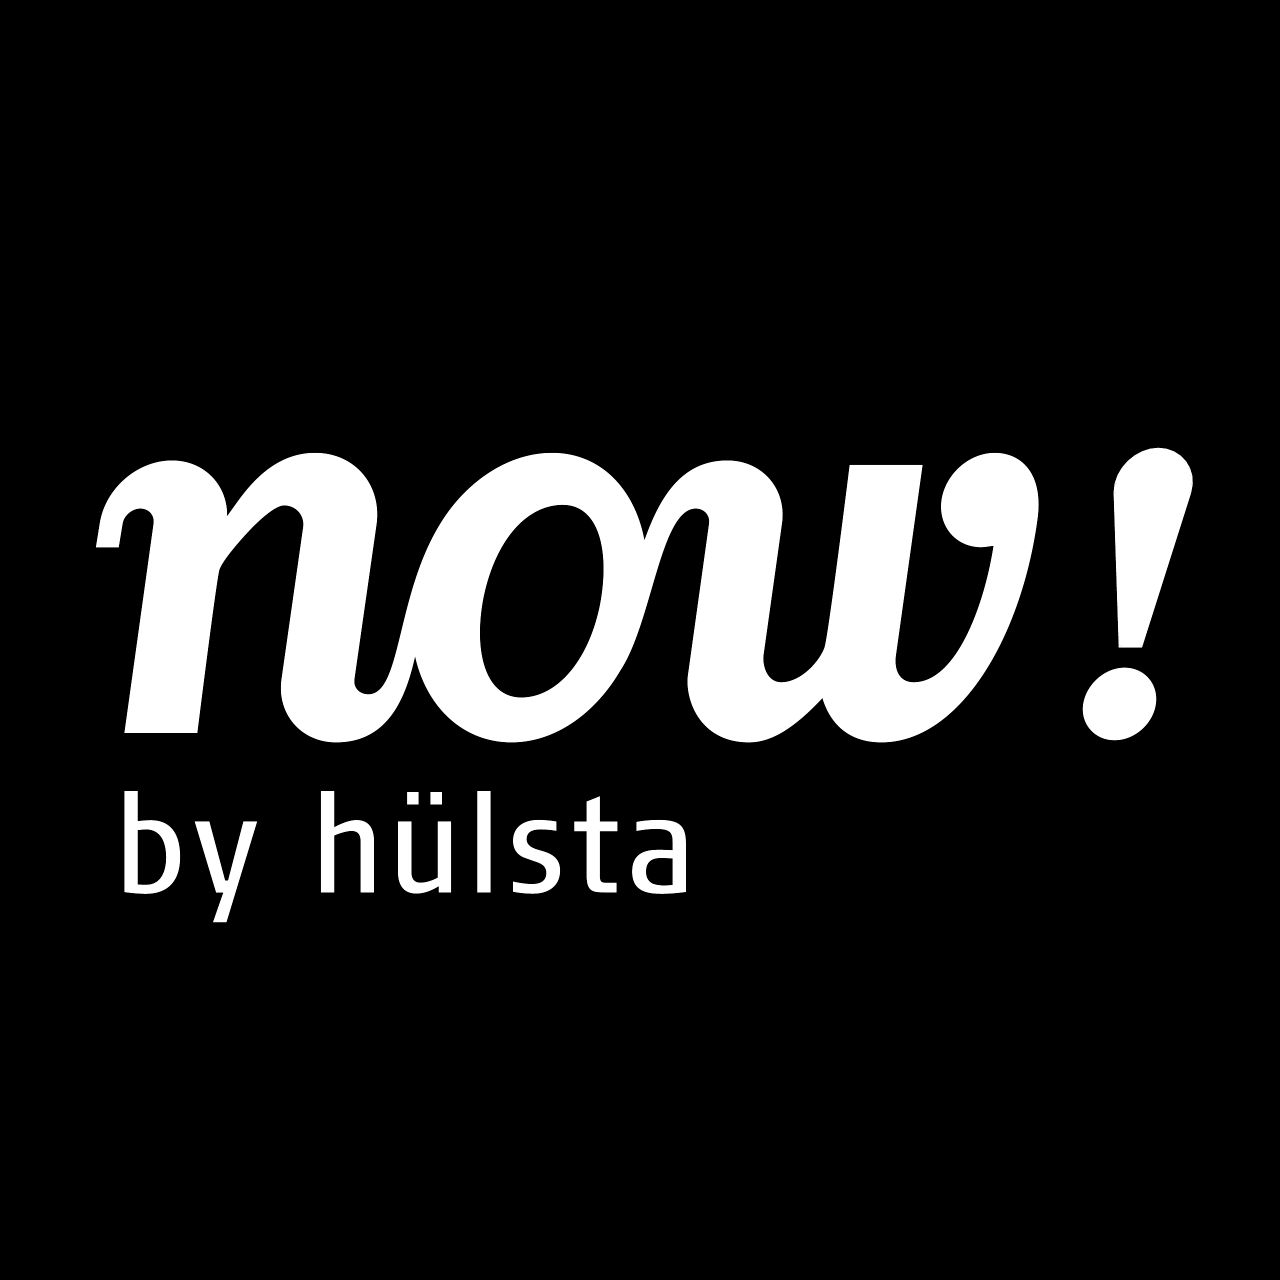 NOW! by hulsta